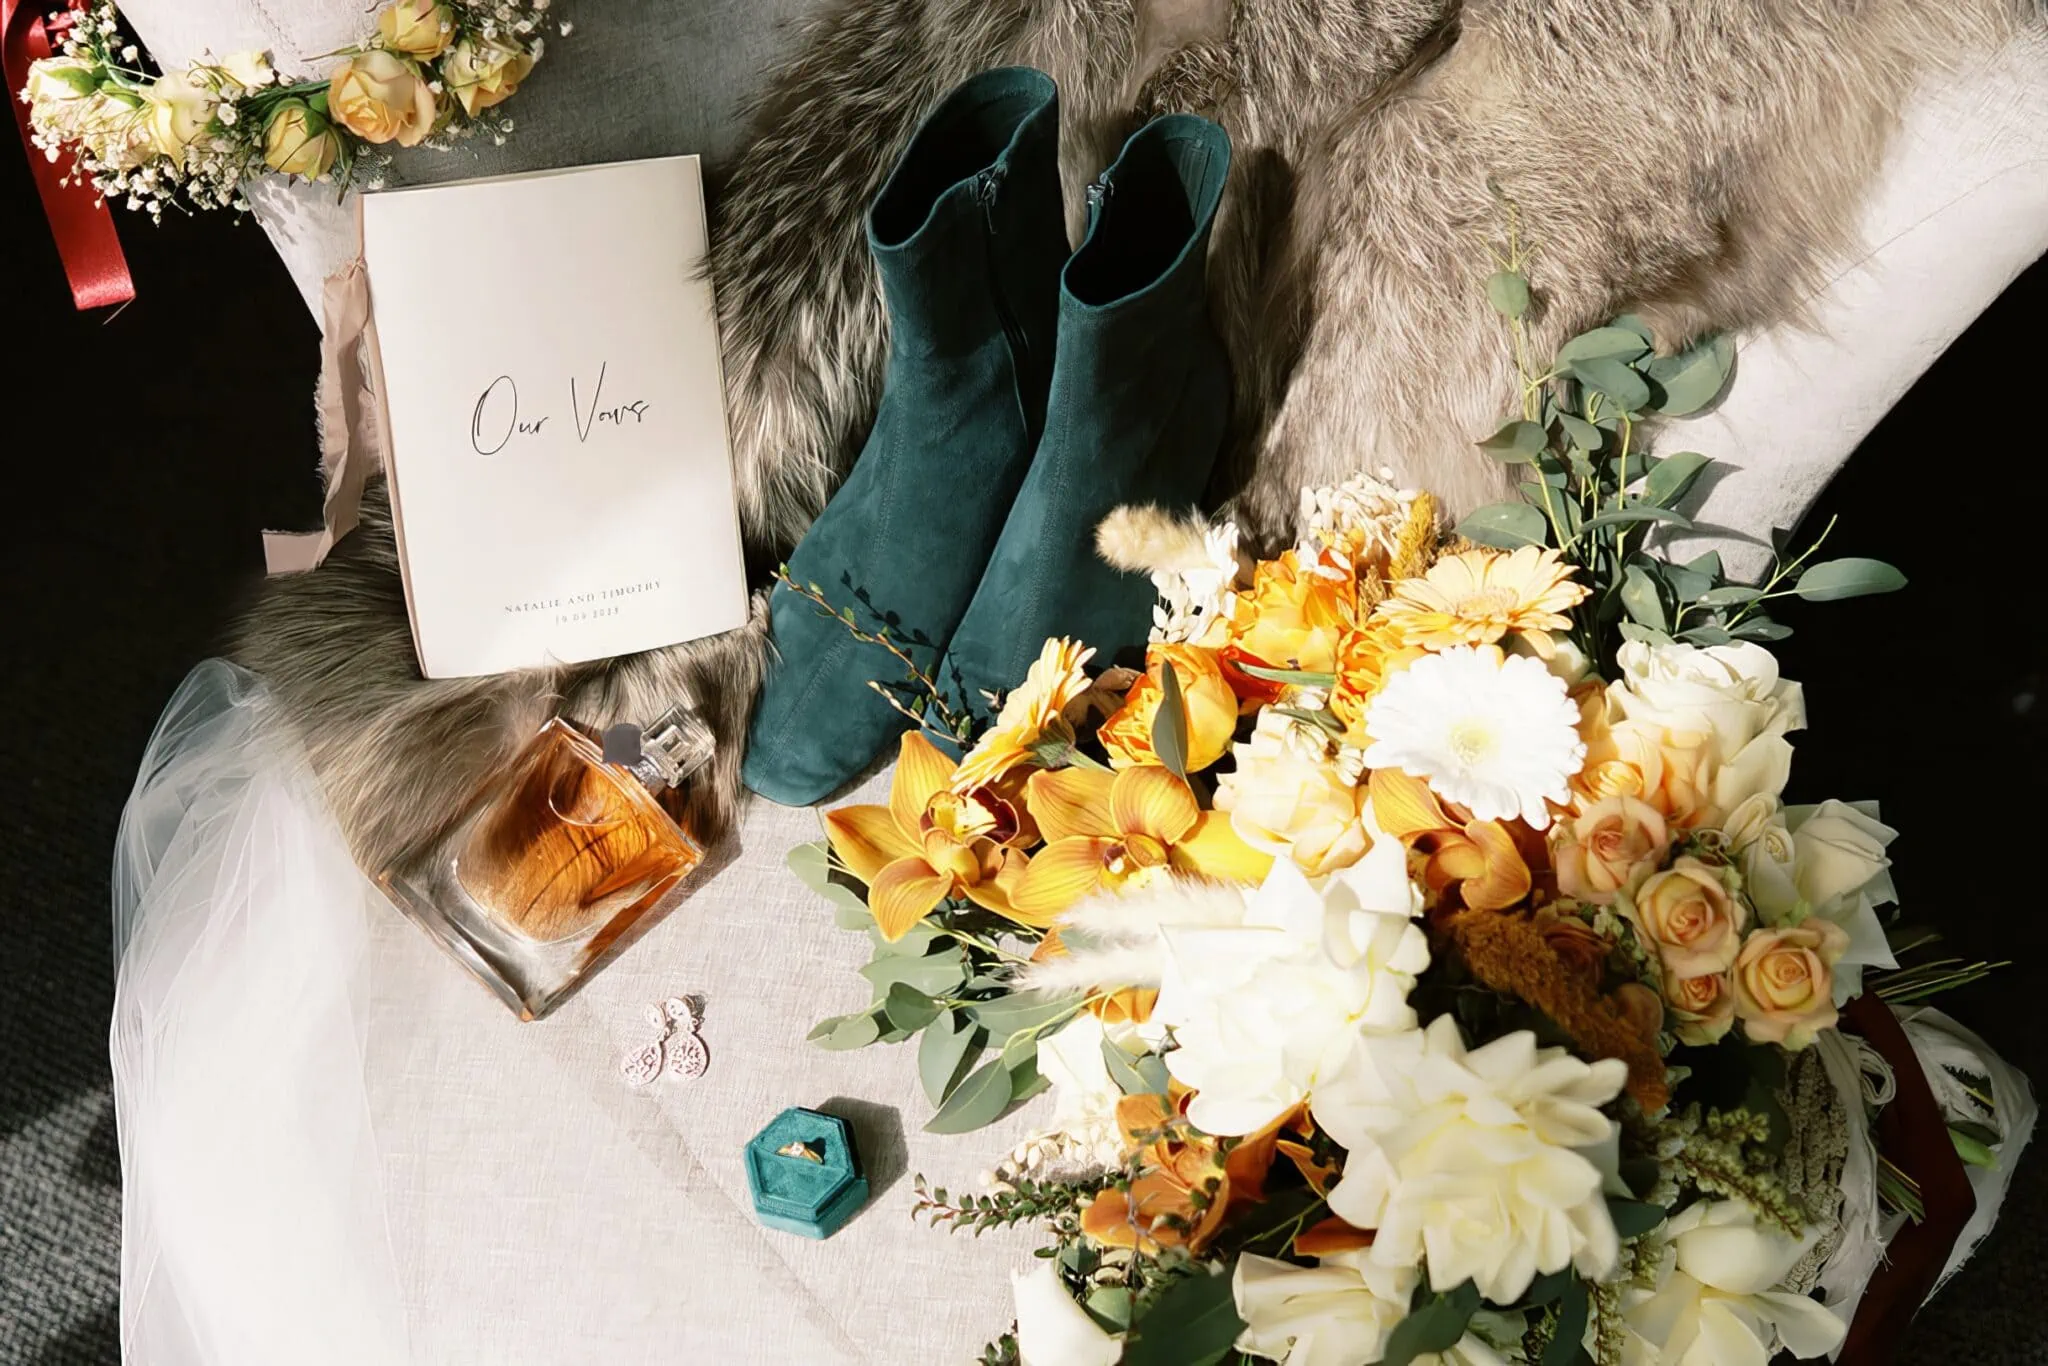 Queenstown New Zealand Elopement Wedding Photographer - A bouquet of flowers and a book on a chair.